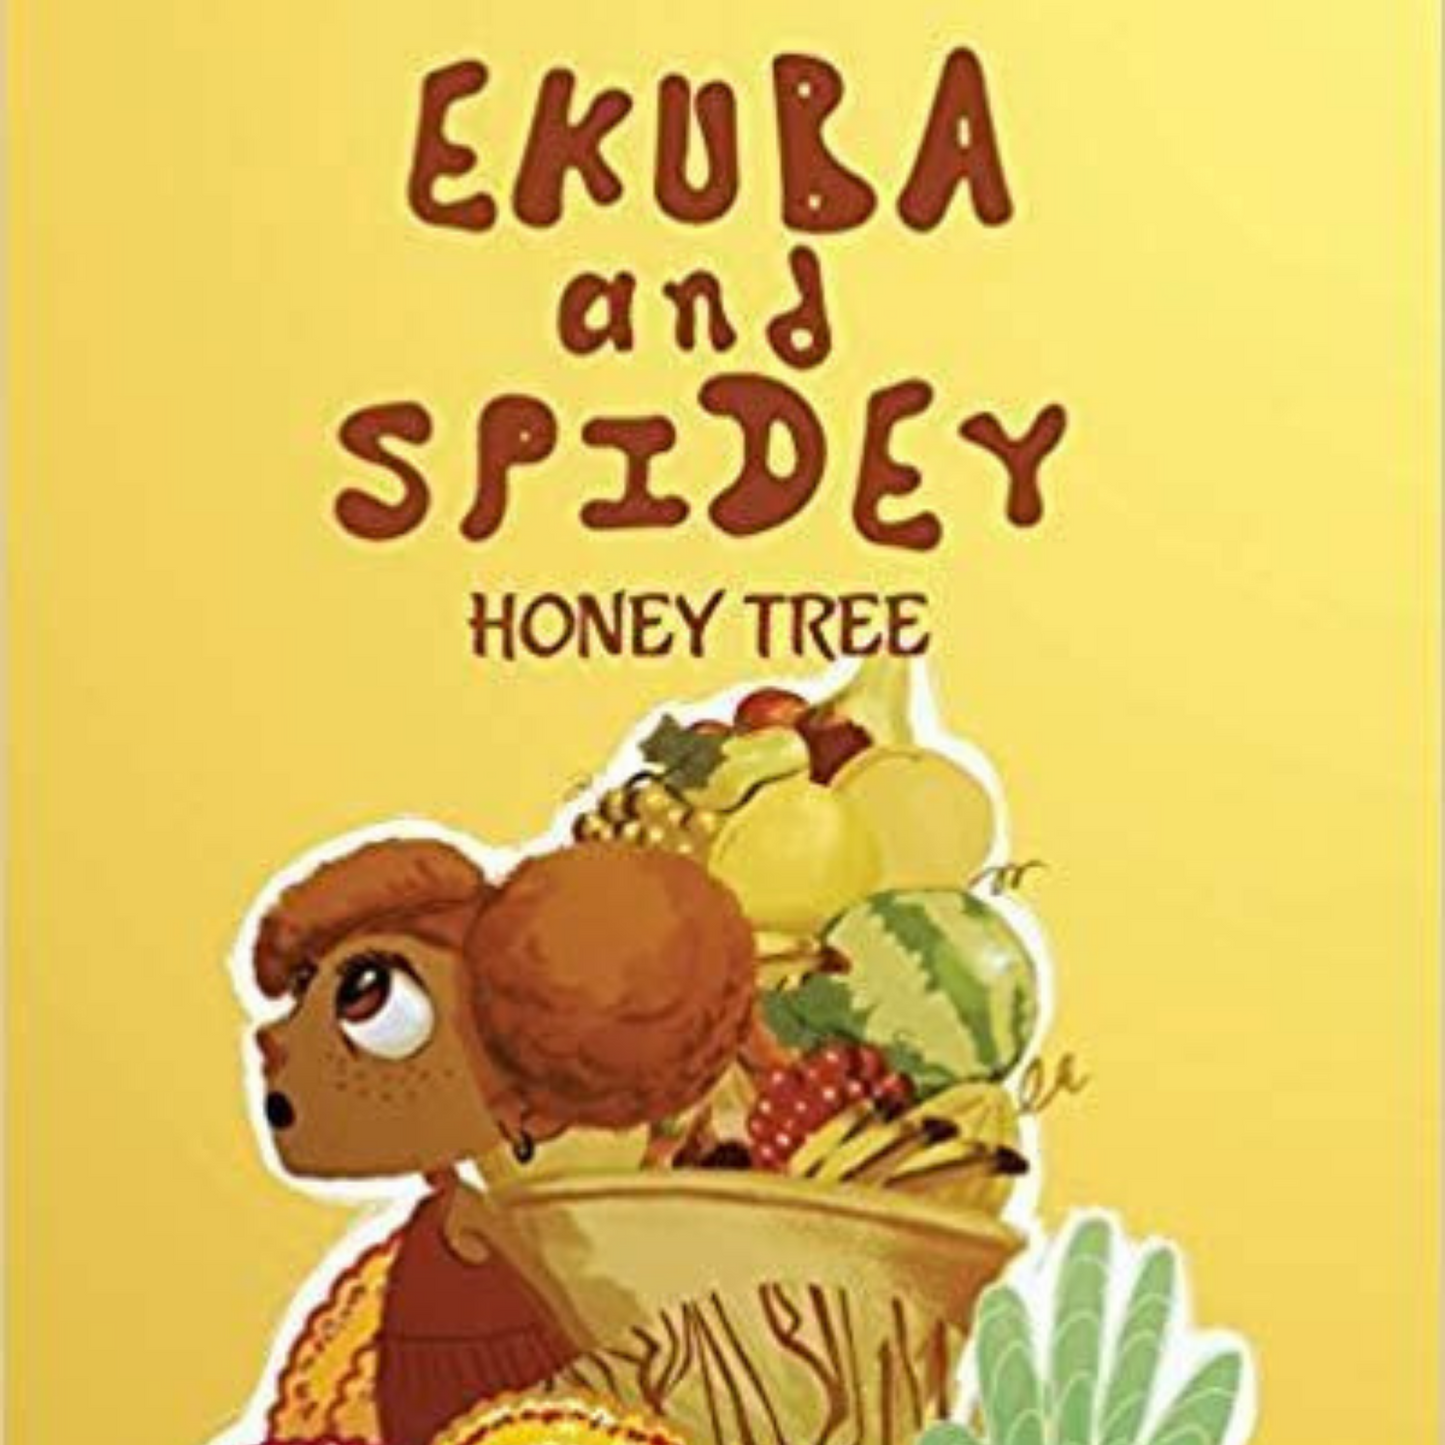 Ekuba and Spidey: Honey Tree